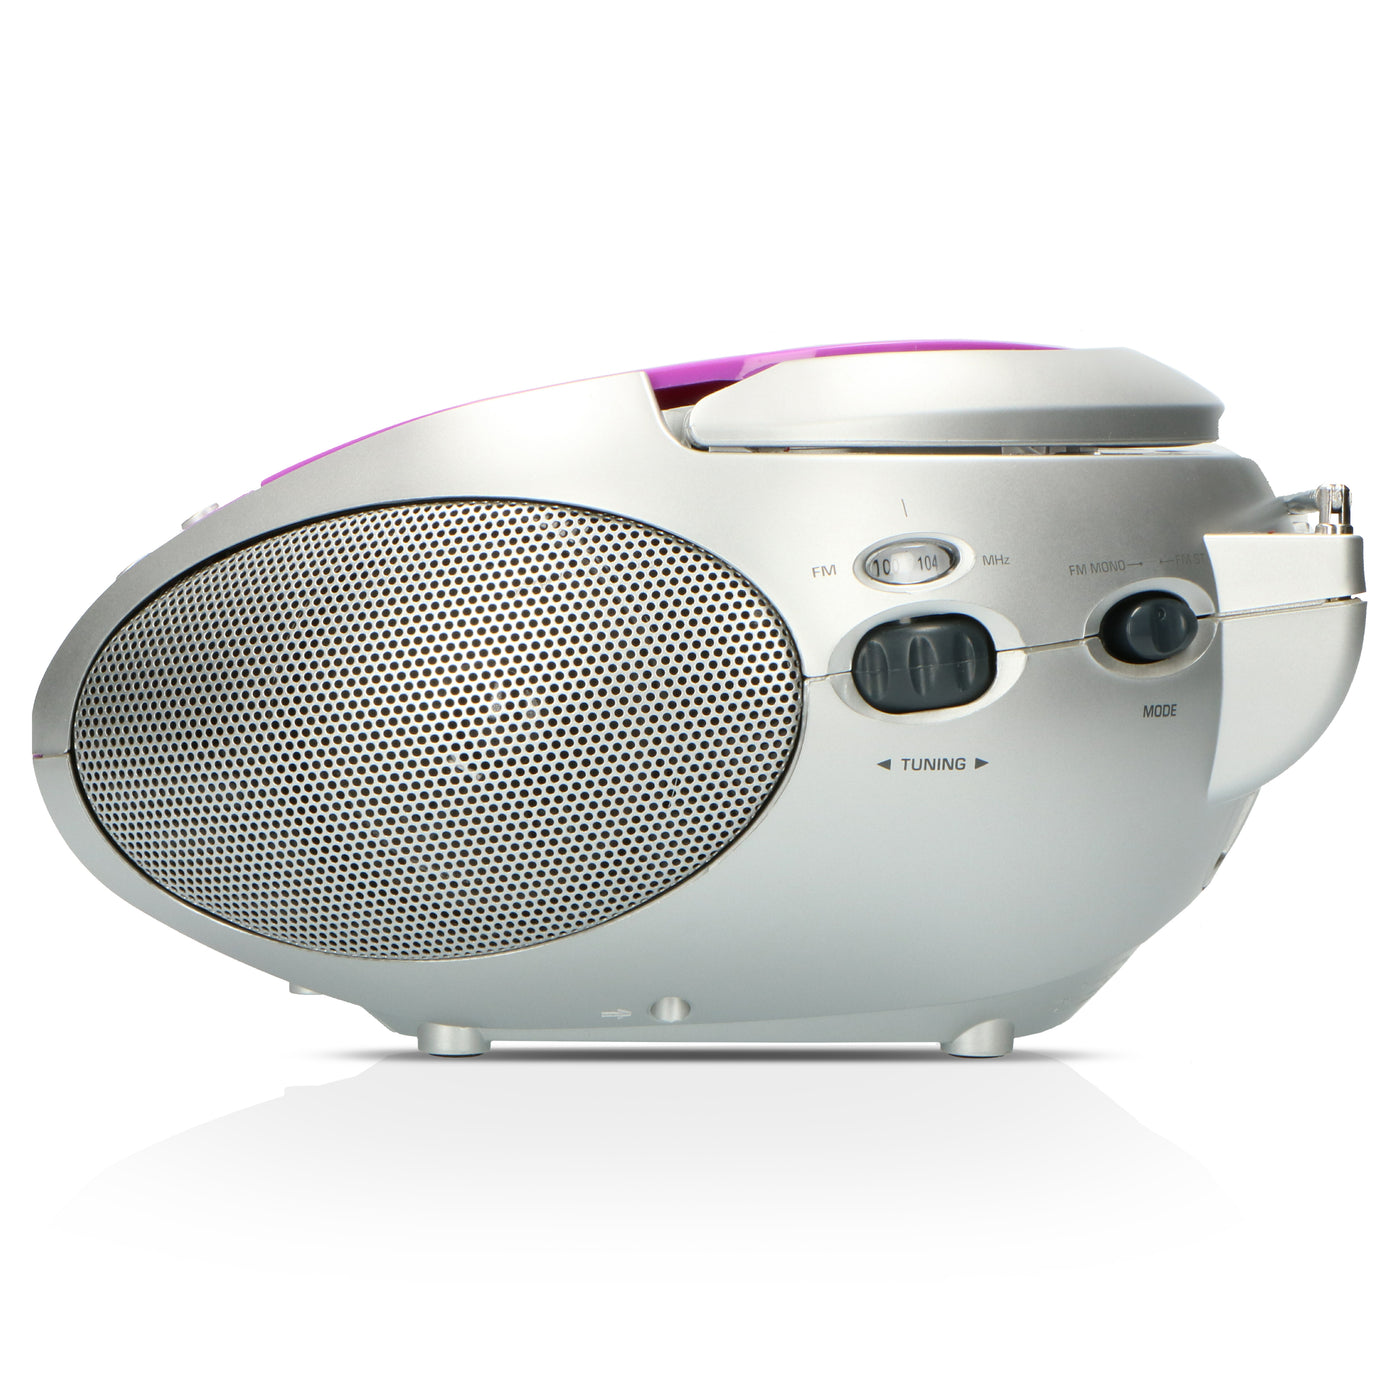 LENCO SCD-24 Purple - Portable stereo FM radio with CD player - Purple